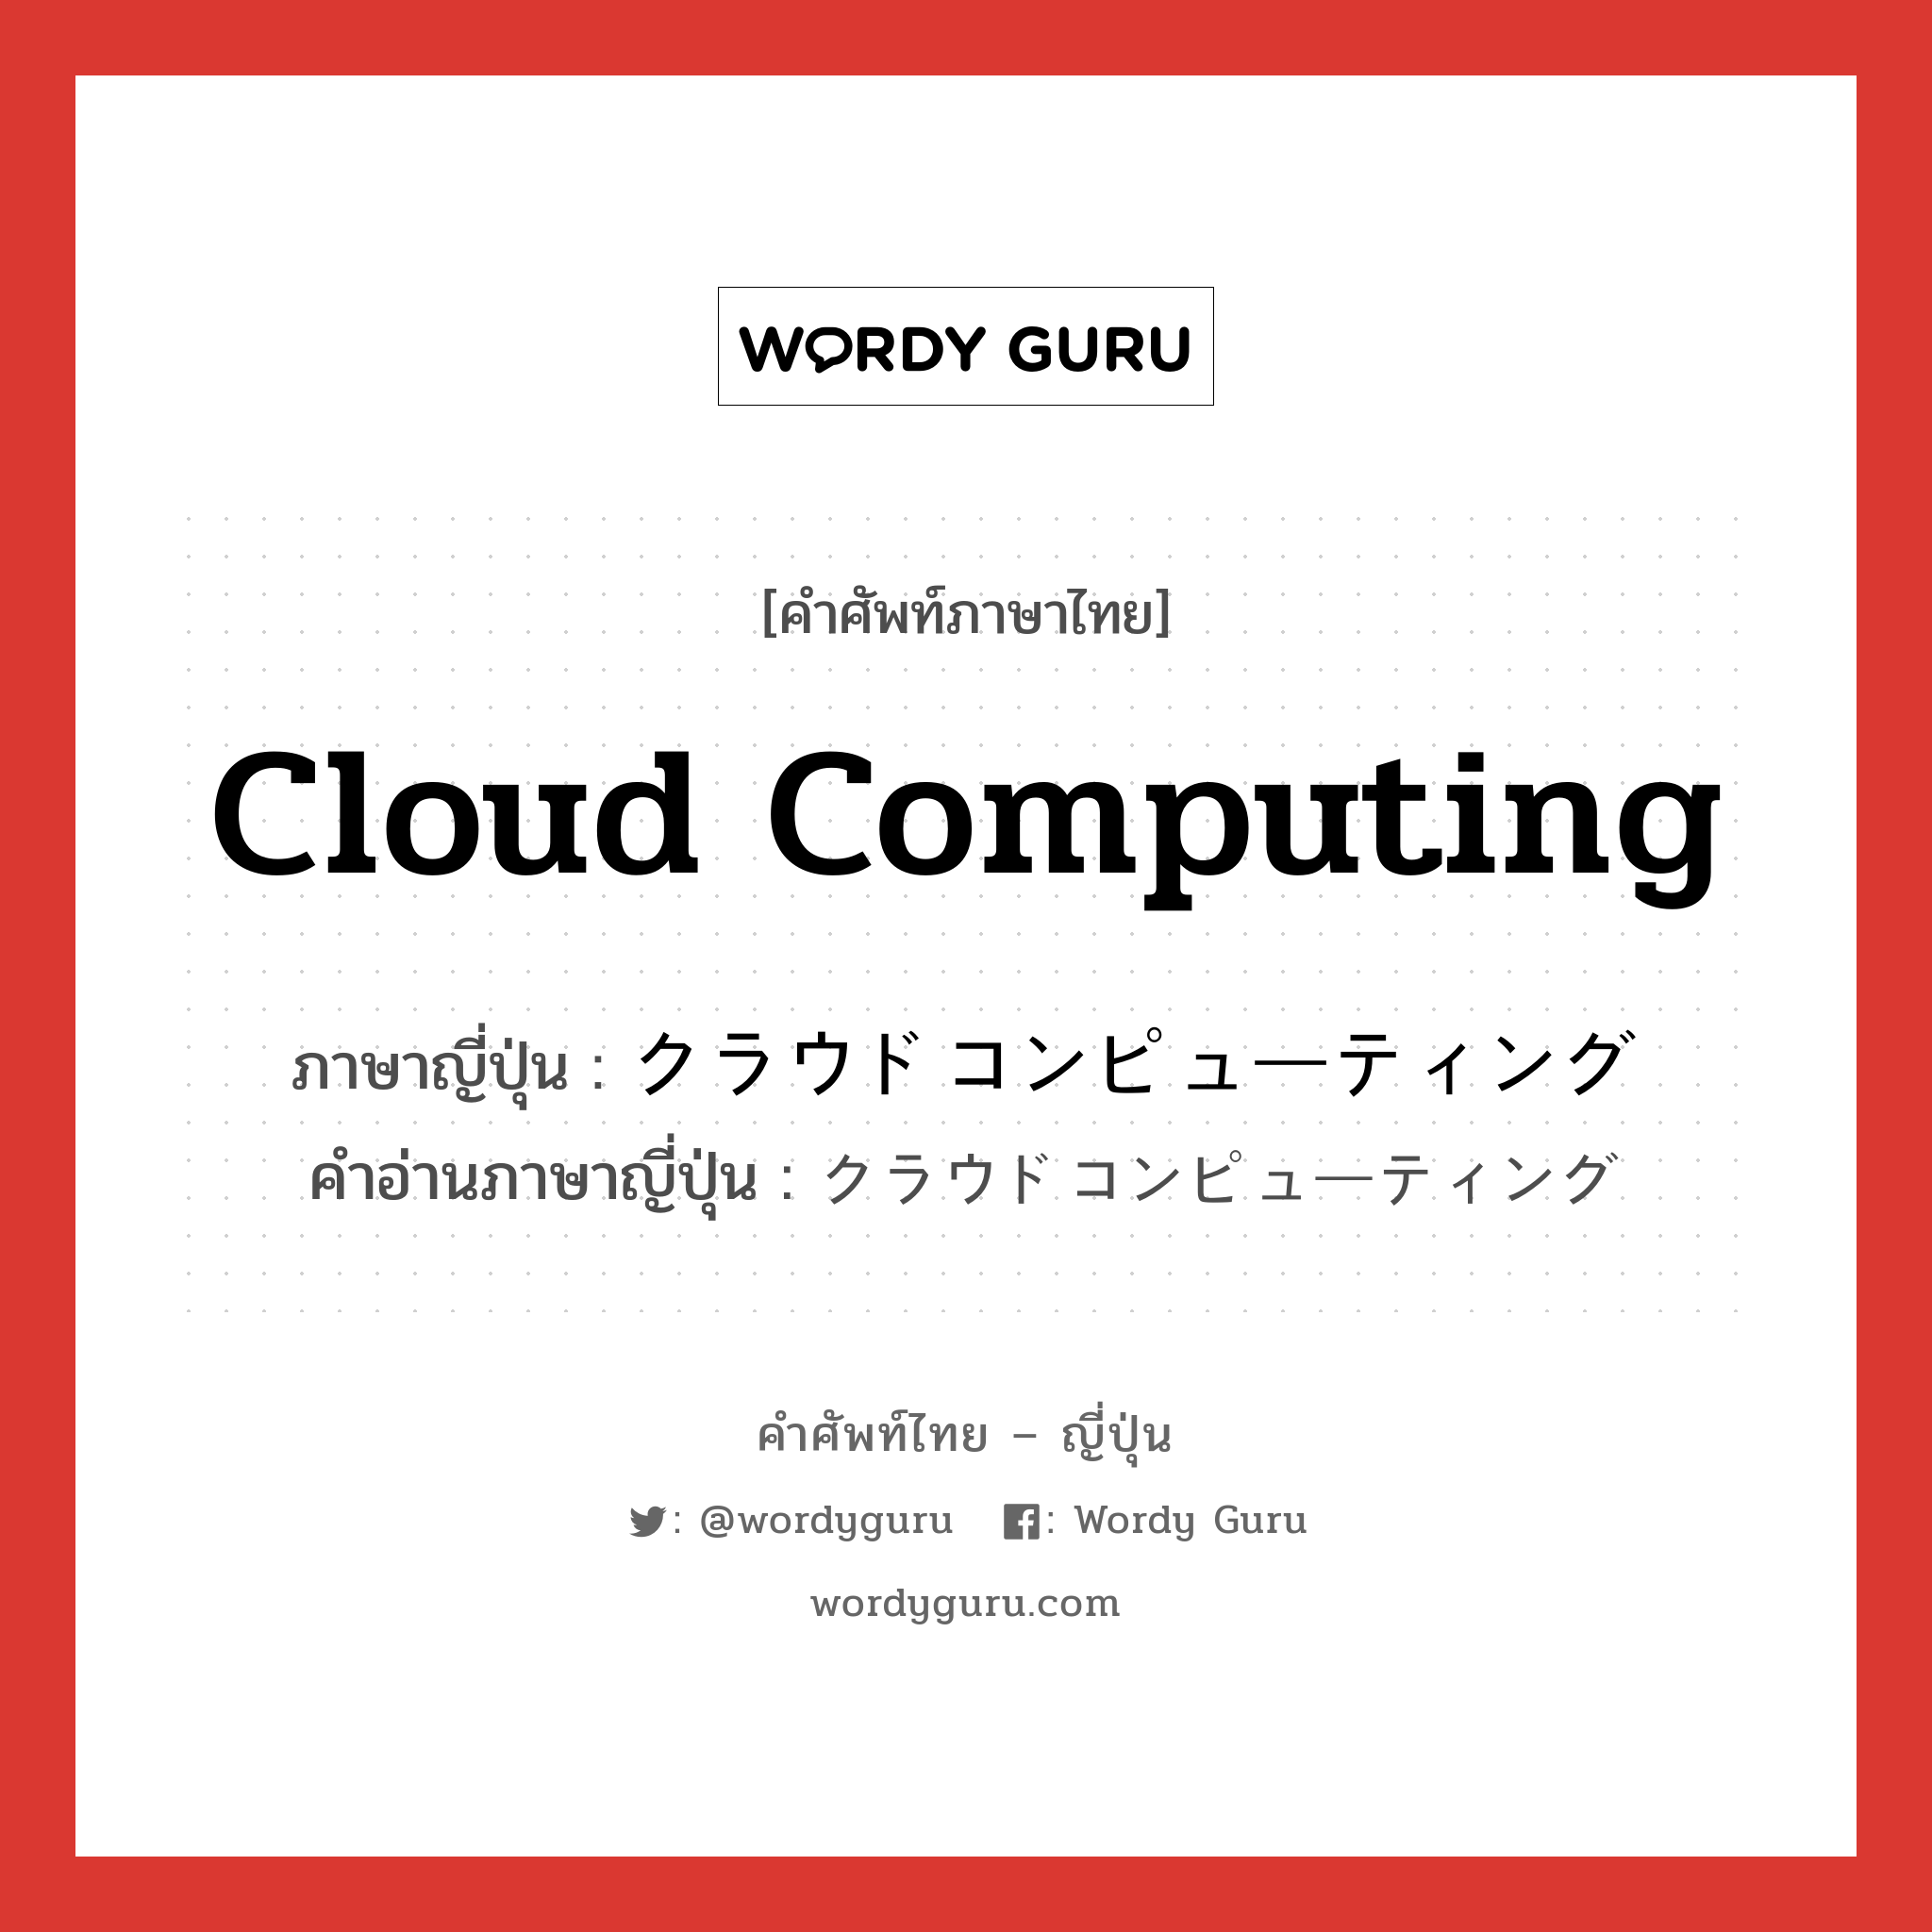 Cloud Computing ภาษาญี่ปุ่นคืออะไร, คำศัพท์ภาษาไทย - ญี่ปุ่น Cloud Computing ภาษาญี่ปุ่น クラウドコンピューティング คำอ่านภาษาญี่ปุ่น クラウドコンピューティング หมวด n หมวด n